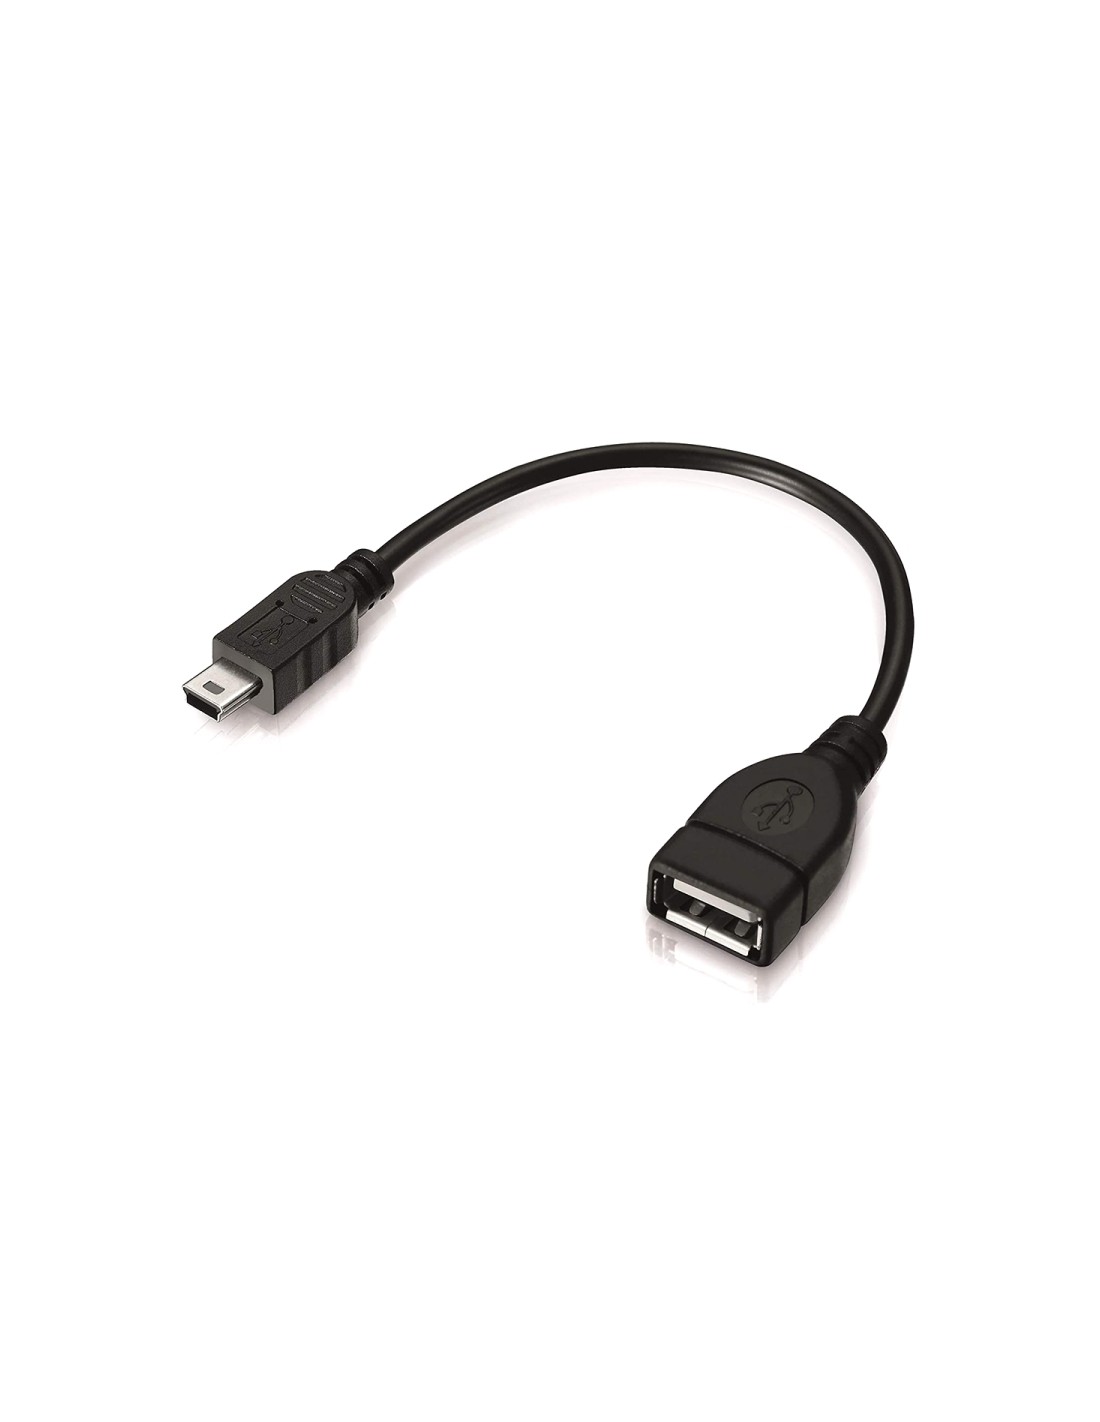 Acheter Adaptateur USB type-c OTG mâle vers Micro USB femelle